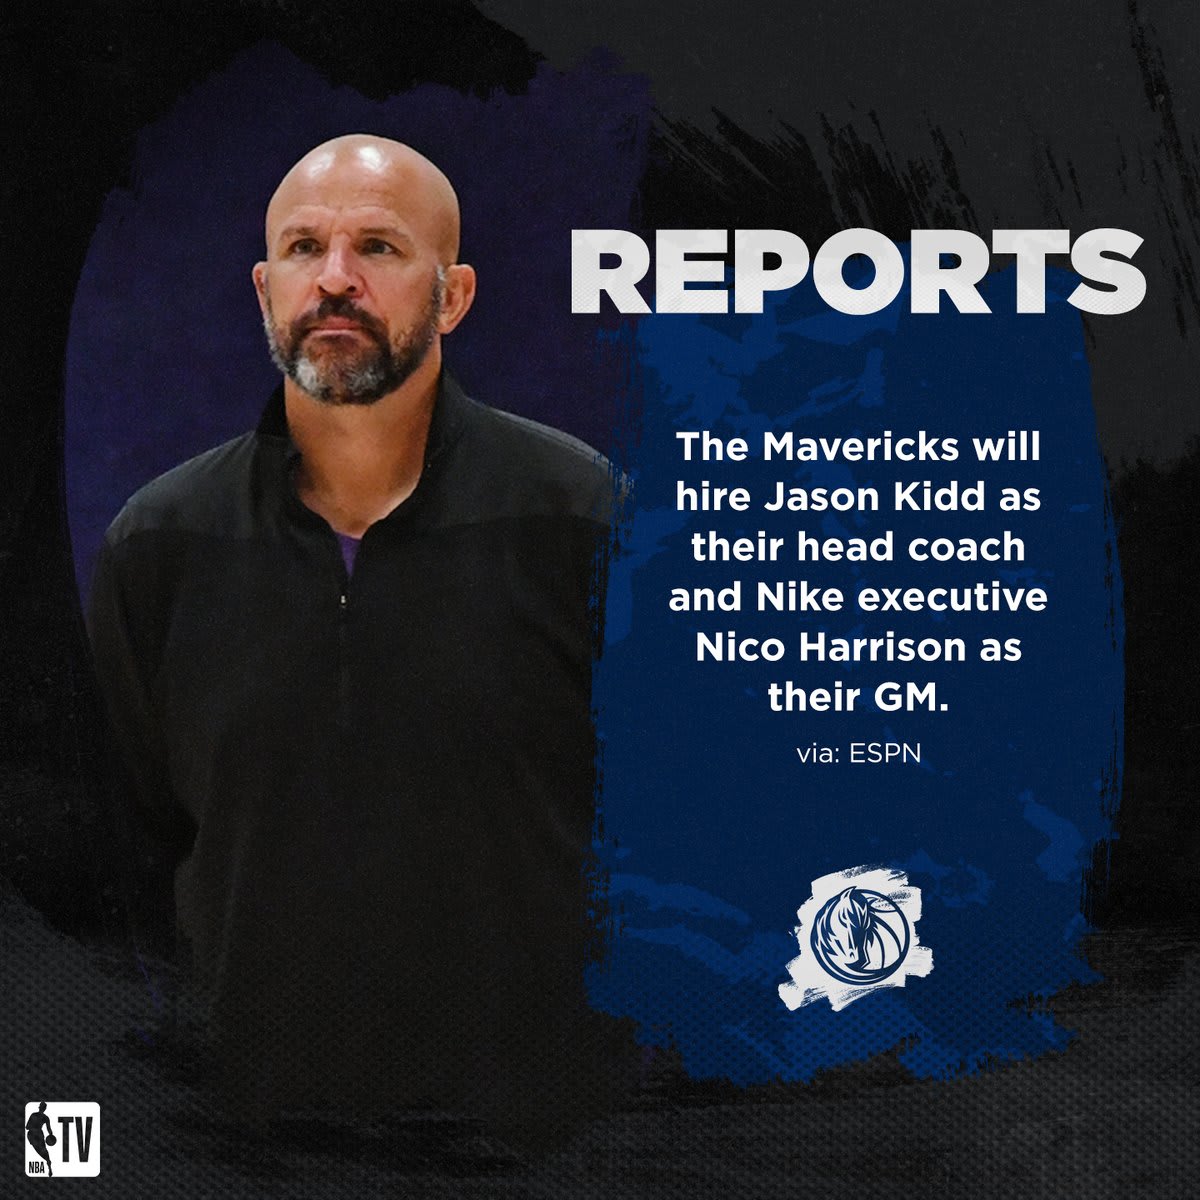 Jason Kidd and Nico Harrison are joining the Dallas Mavericks as head coach and GM